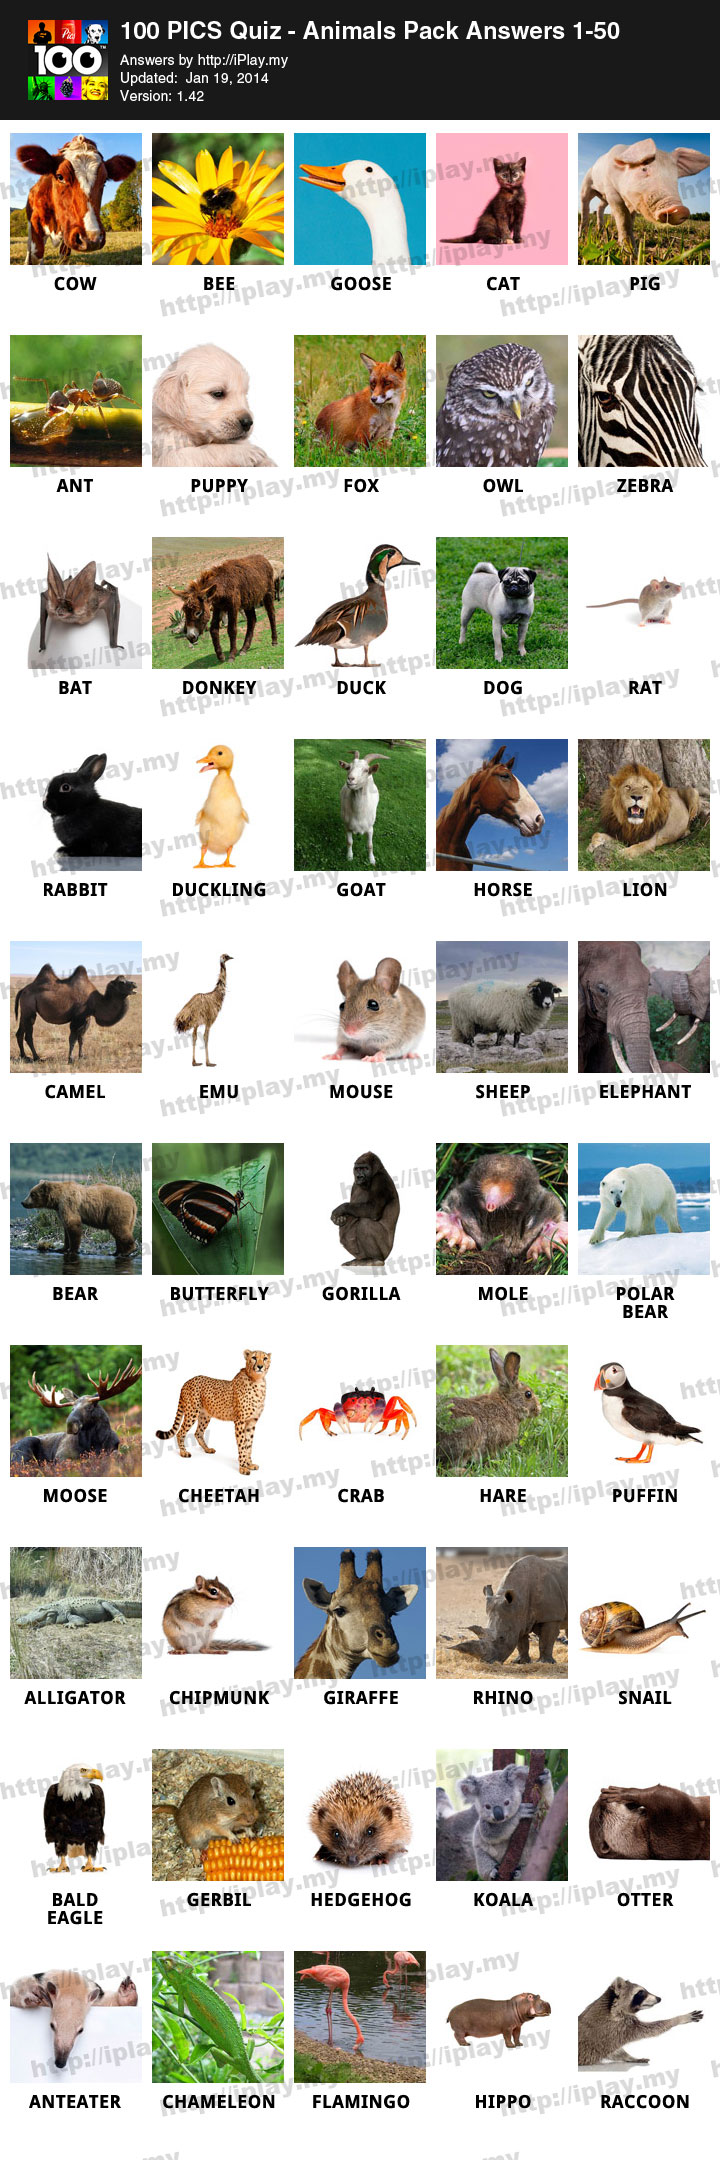 100-Pics-Quiz-Animals-Pack-Answers-1-50